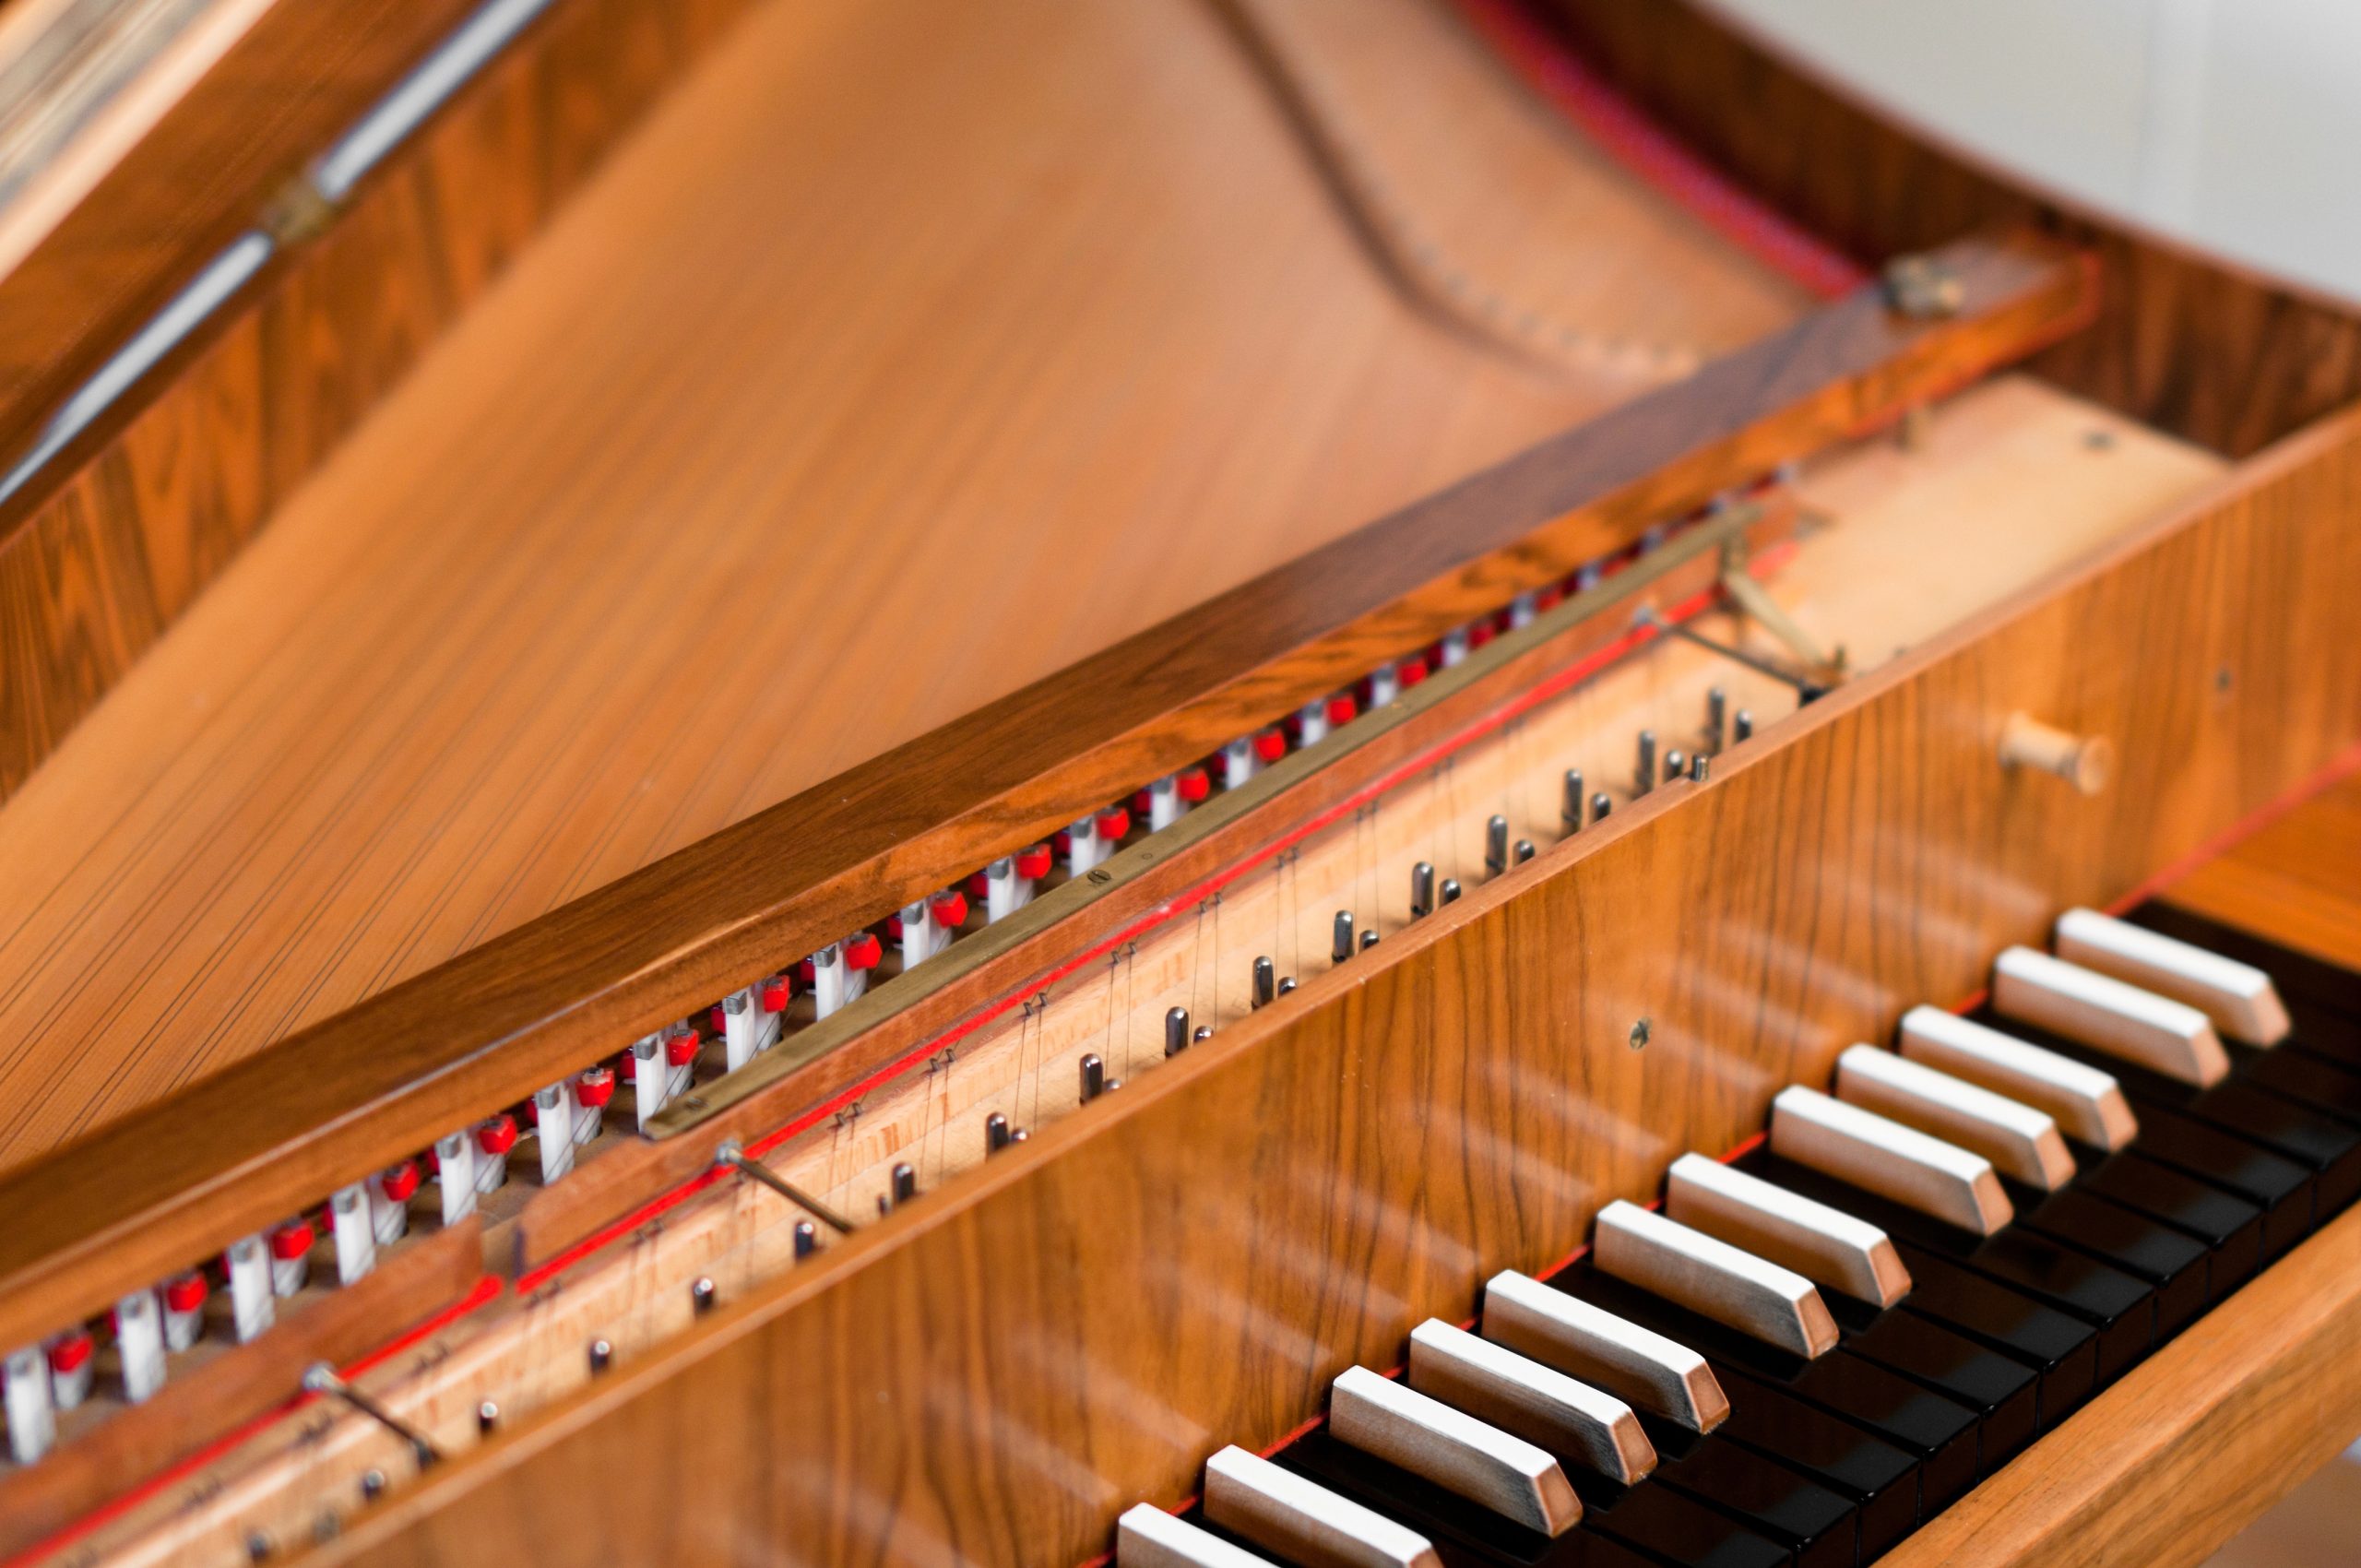 Glory of Bach – Brandenburg Concertos, Featuring Kenneth Weiss, Harpsichord